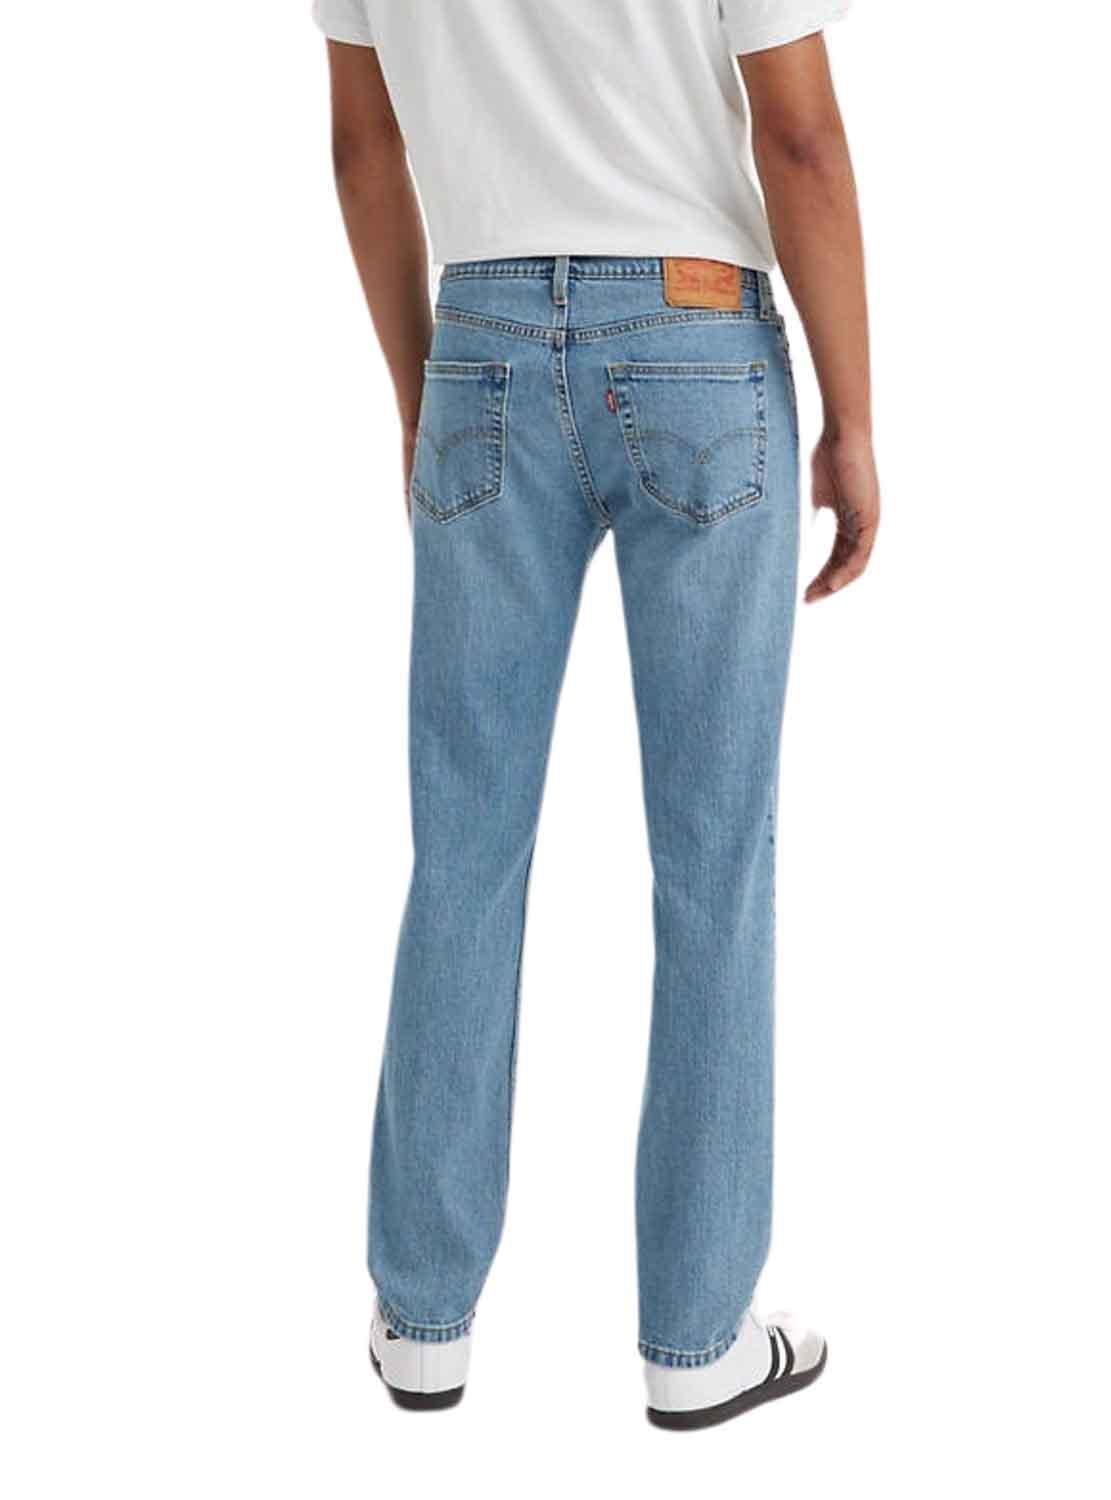 Pantaloni Jeans Levis 511 Denim Chiaro